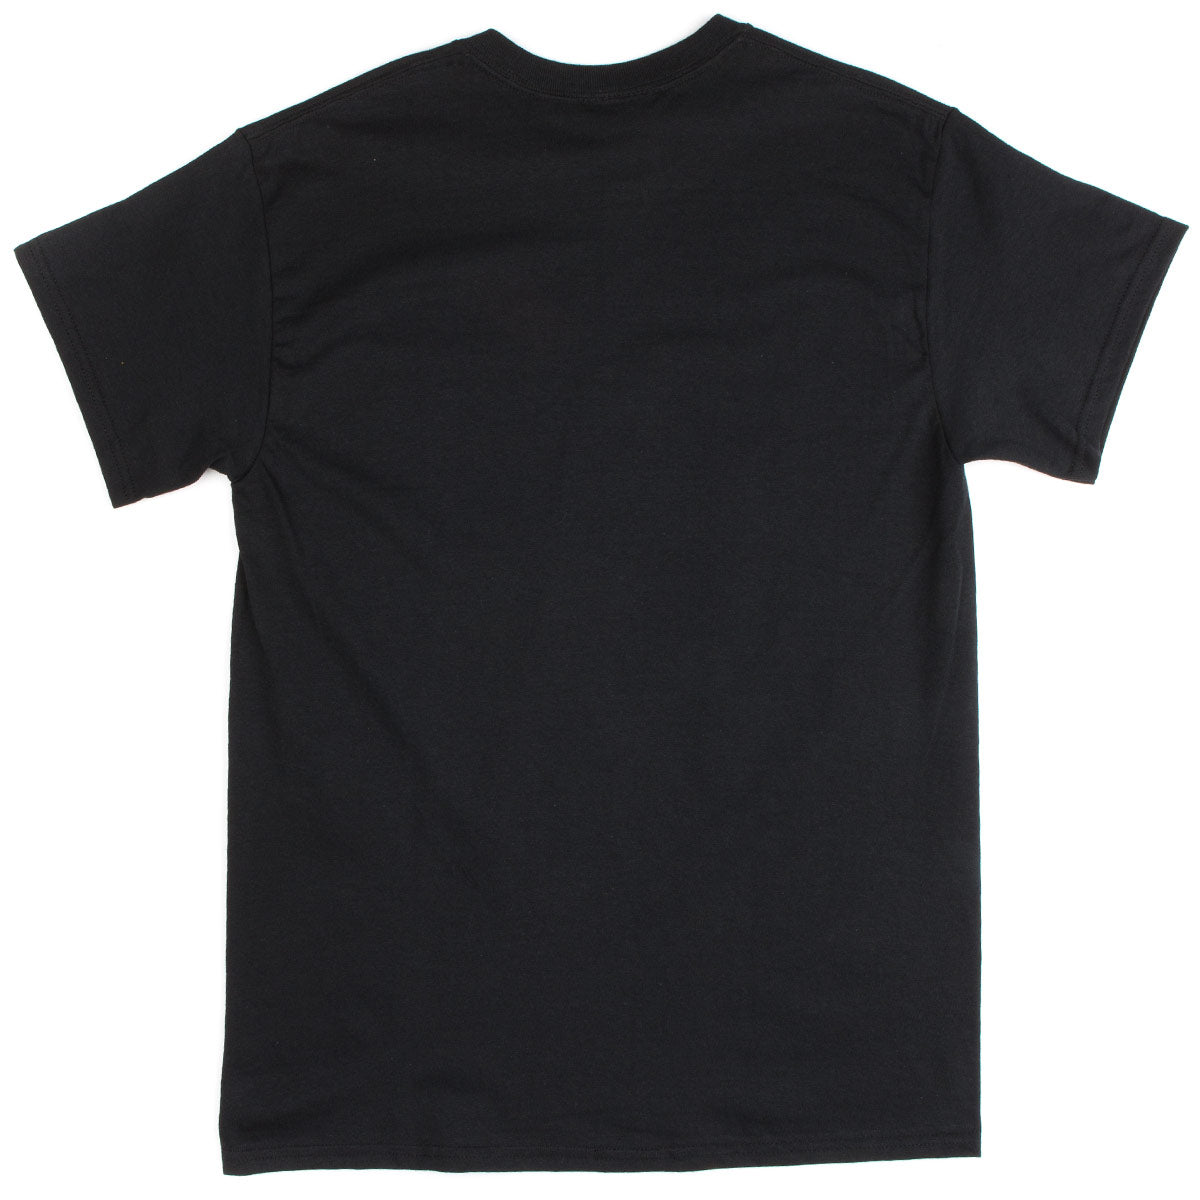 Thrasher Boyfriend T-Shirt - Black image 2